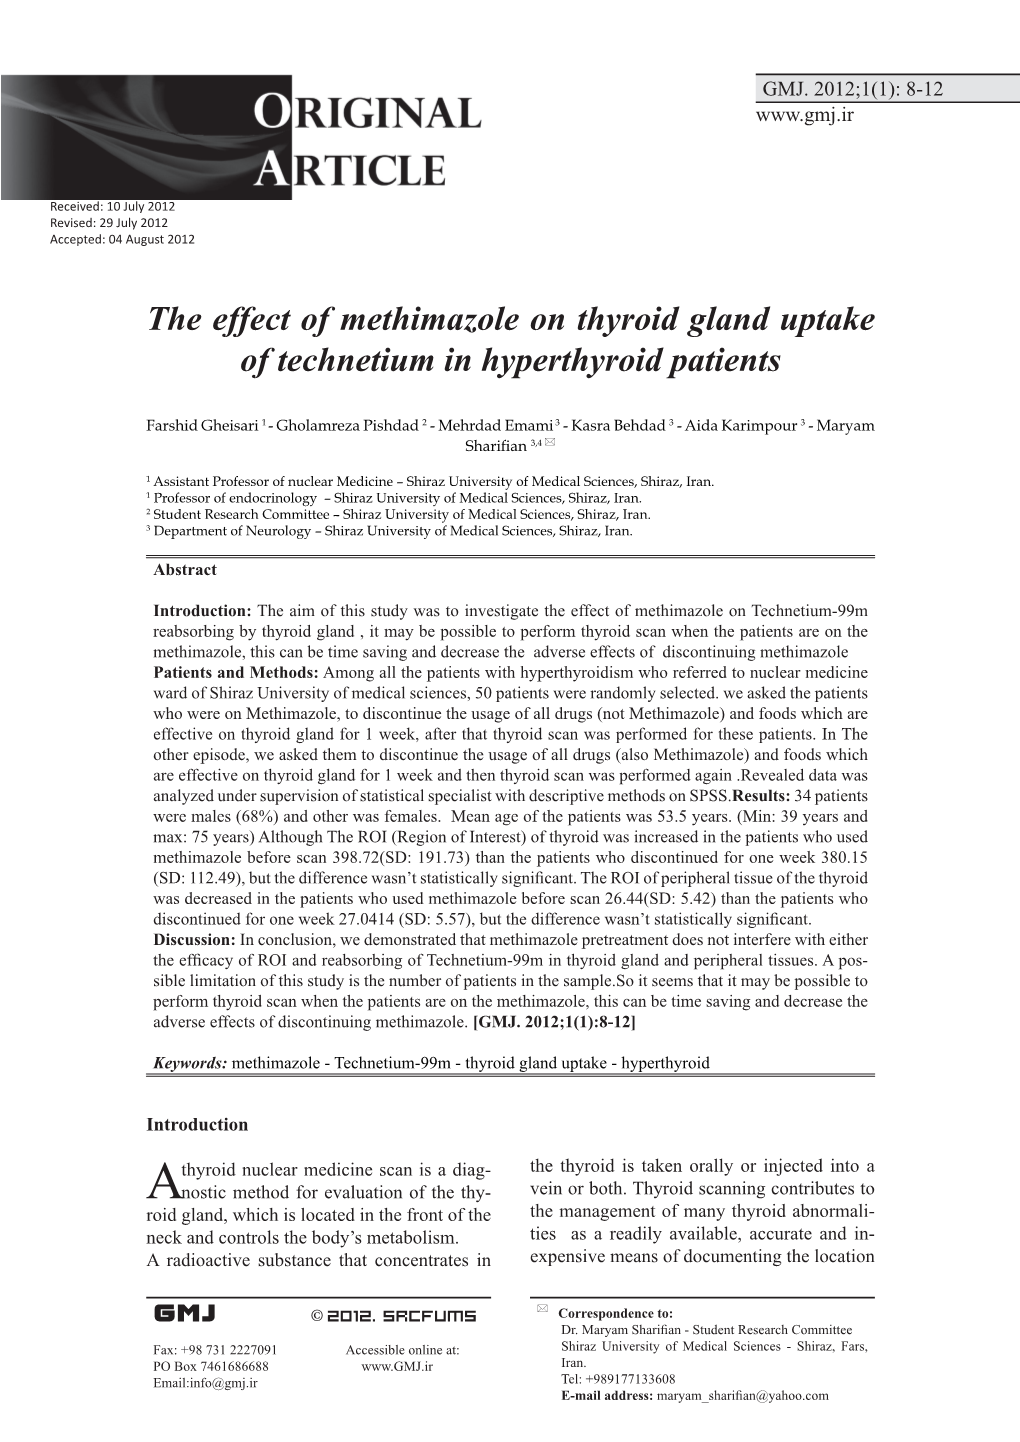 The Effect of Methimazole on Thyroid Gland Uptake of Technetium in Hyperthyroid Patients